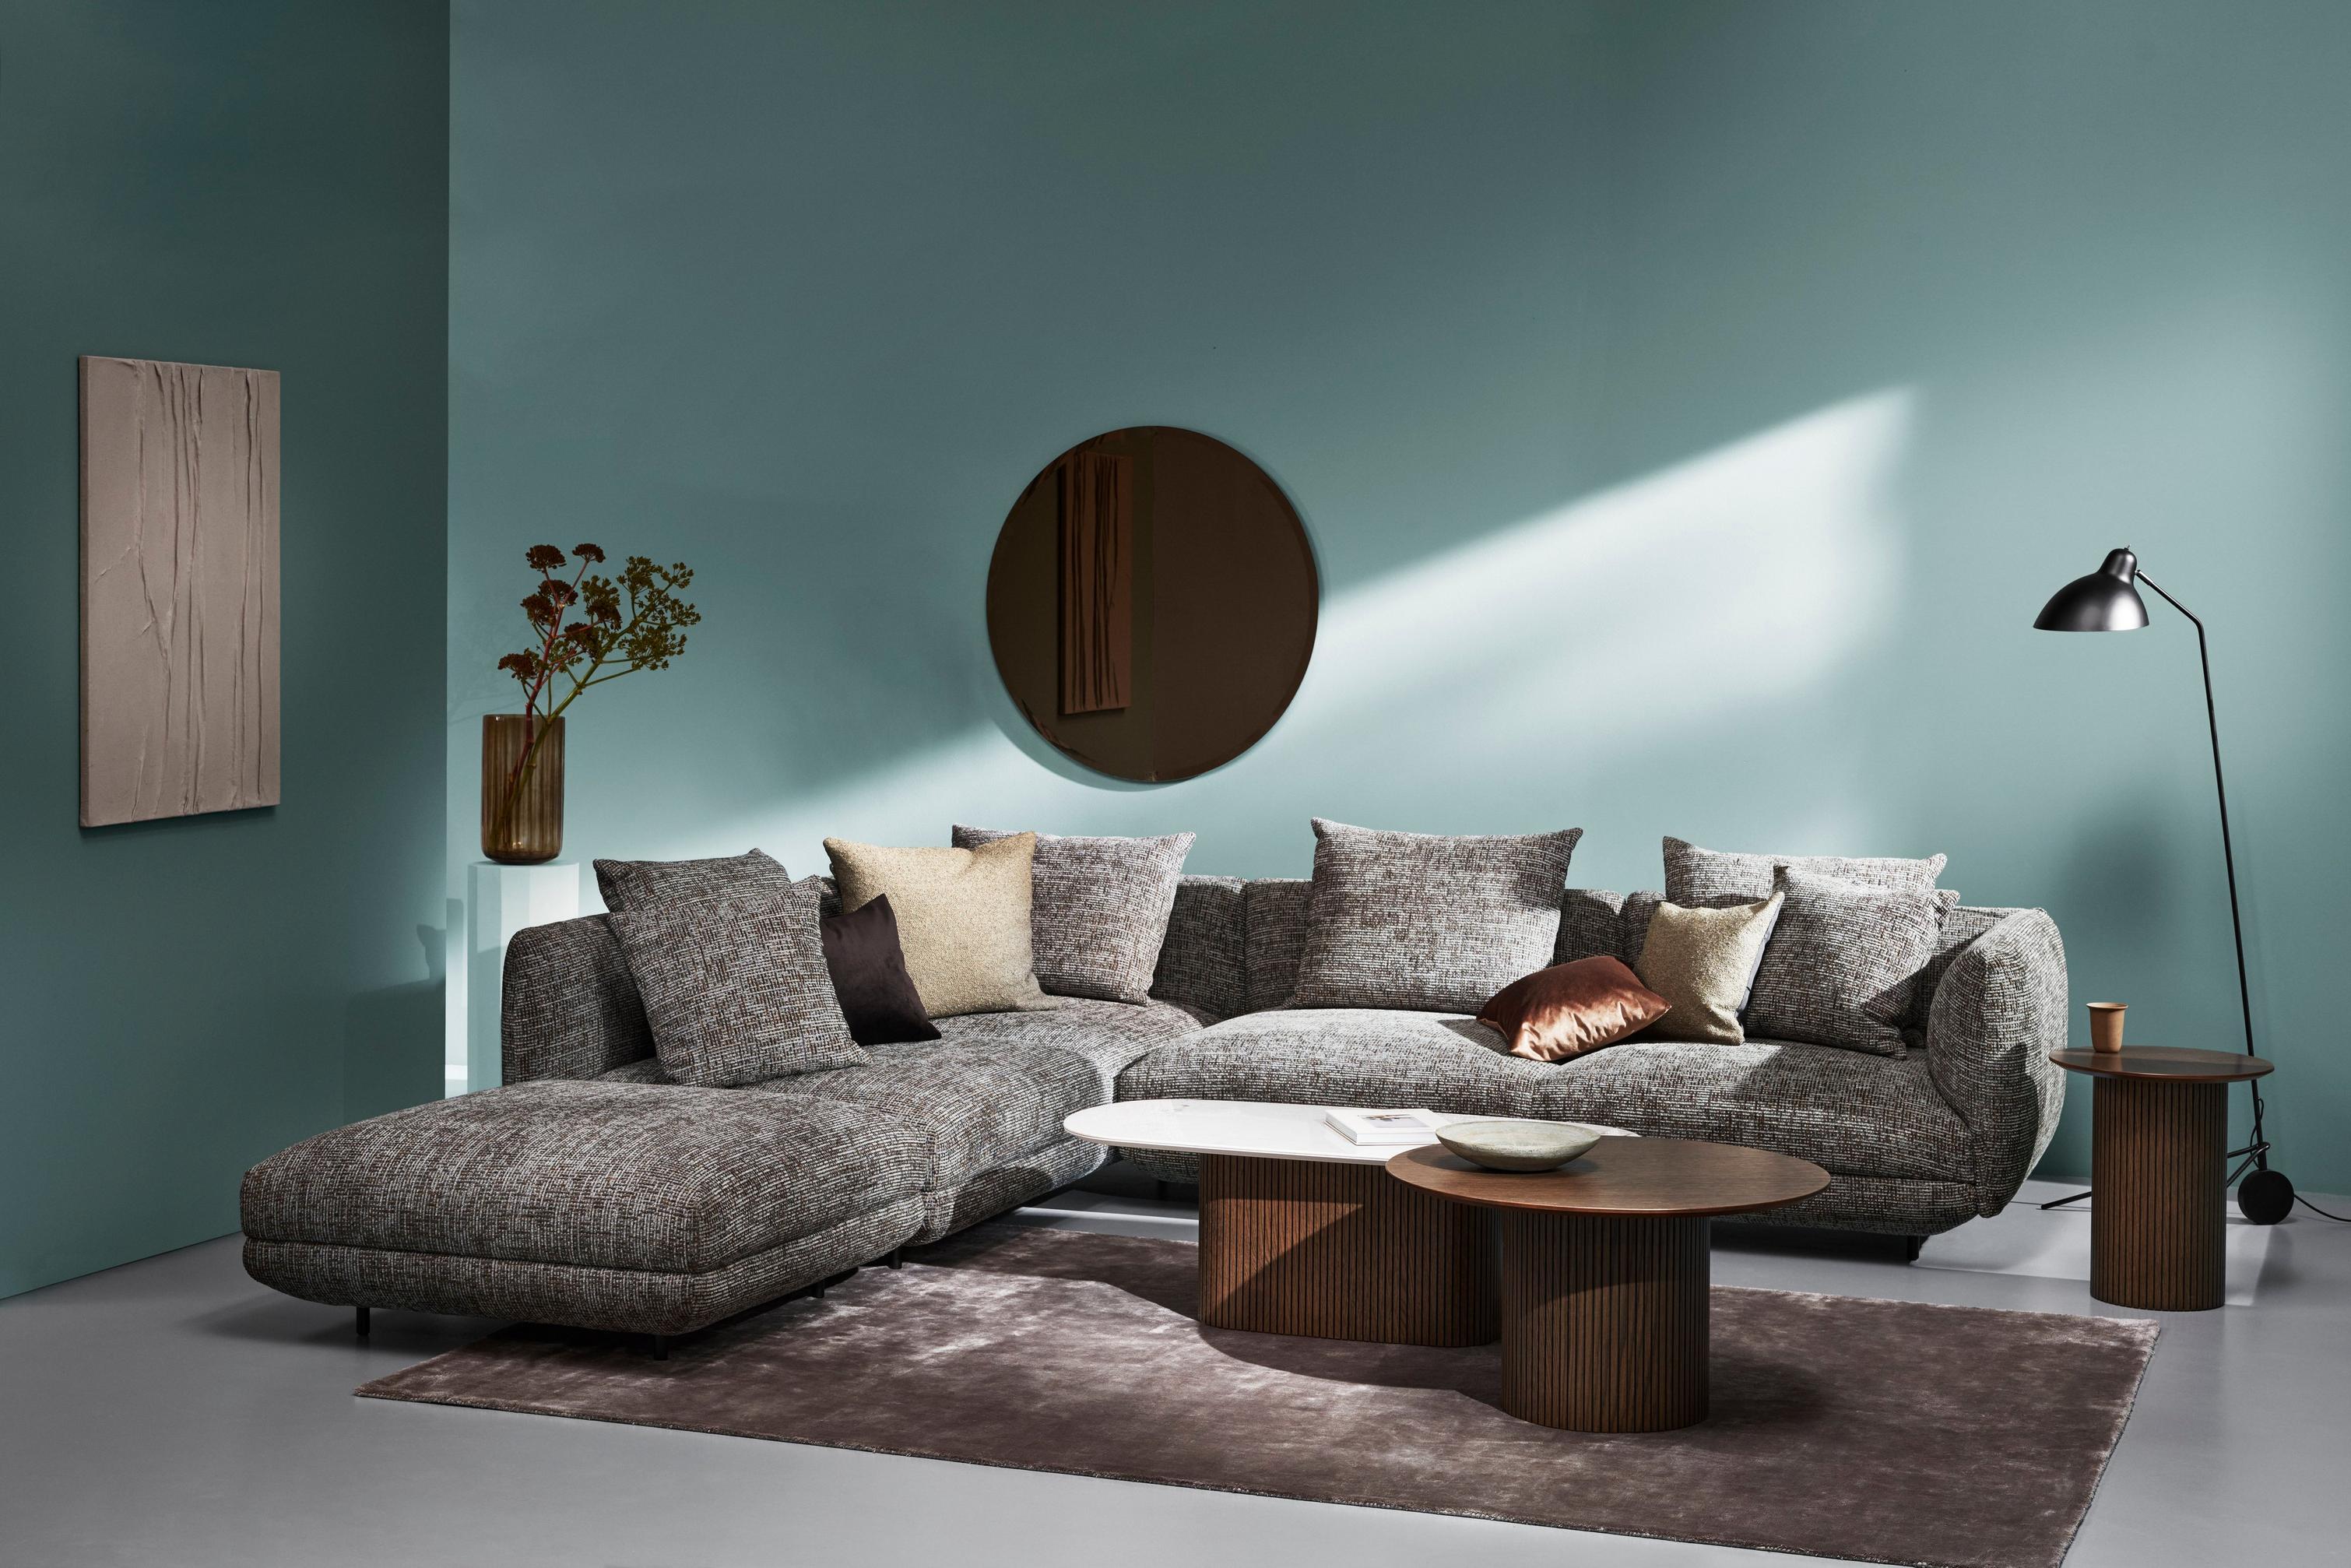 An inviting living space featuring the Salamanca corner sofa.